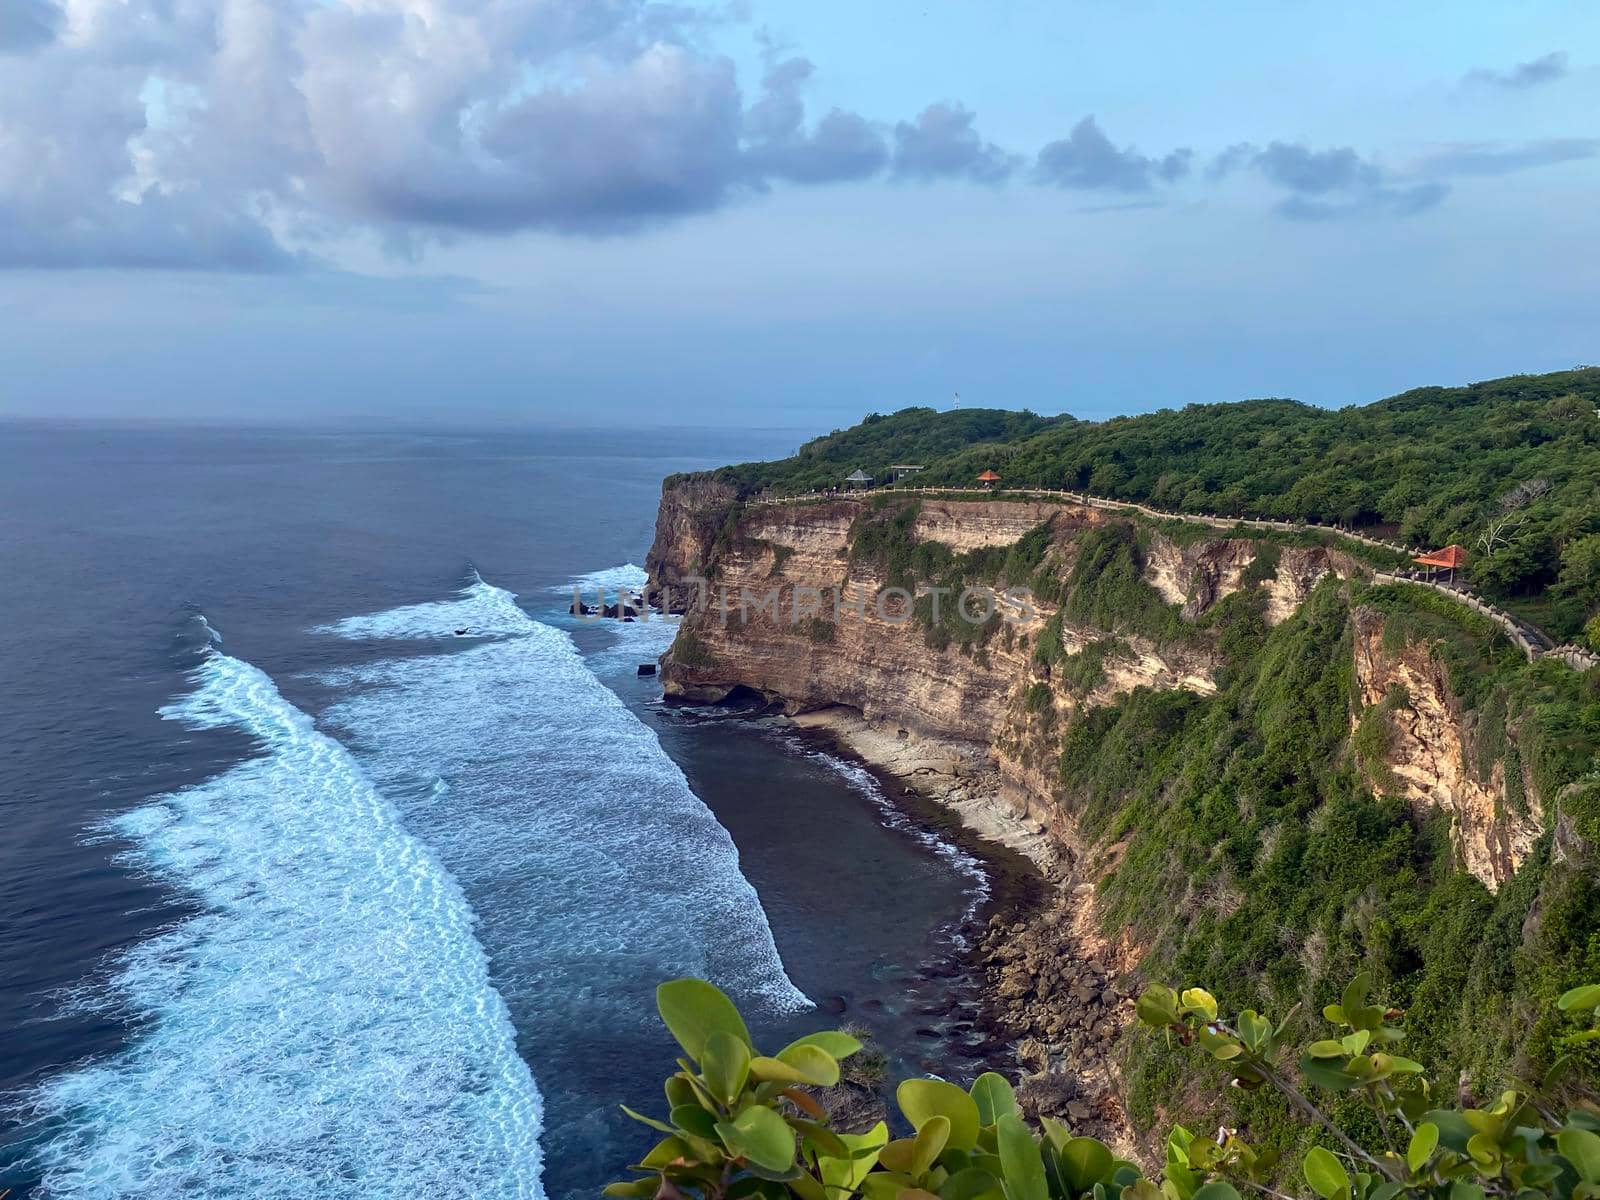 A scenic Uluwatu cliff with pavilion and blue sea in Bali - stock photo